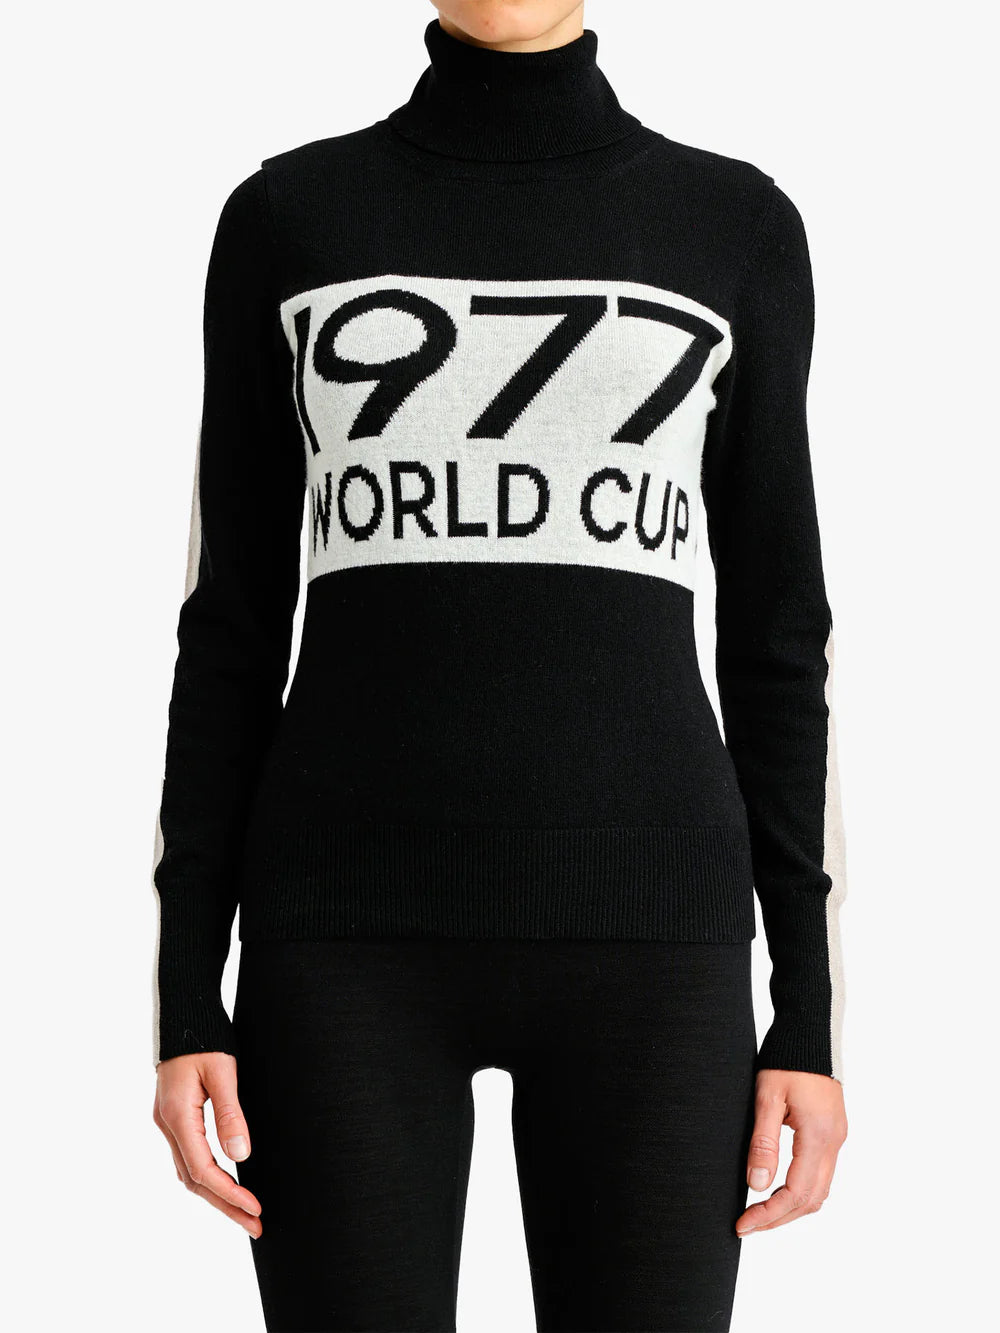 World Cup Sweater Women - Black